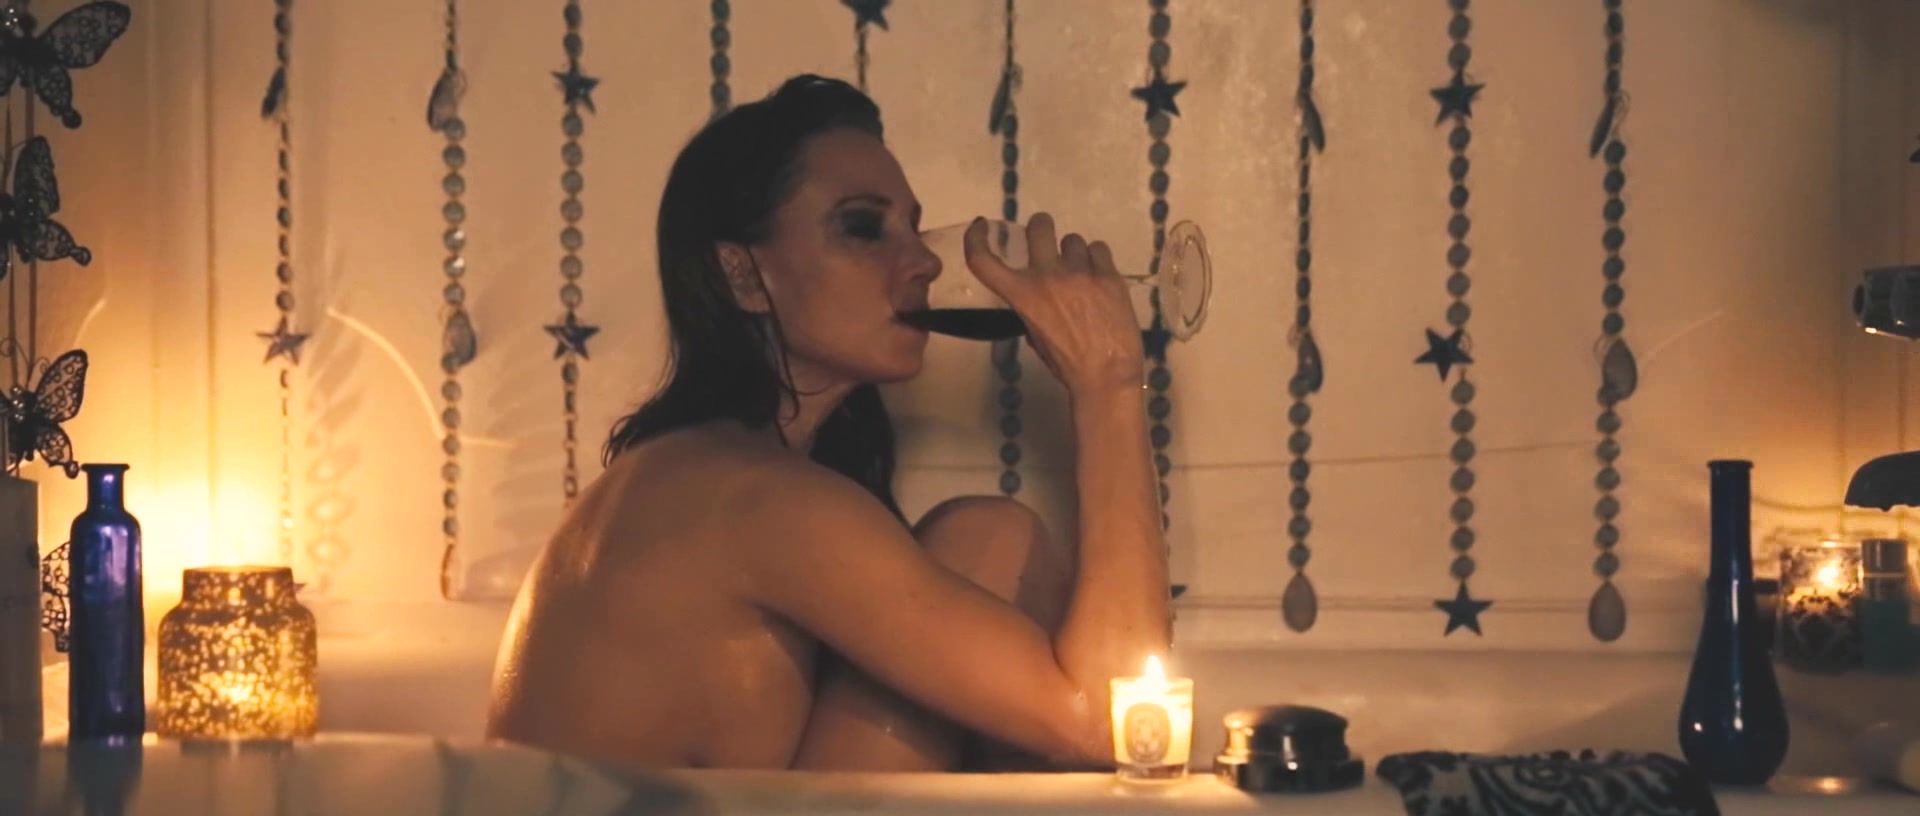 NaughtyAmerica Alexis Kendra naked - Goddess Of Love (2015) Swingers - 2